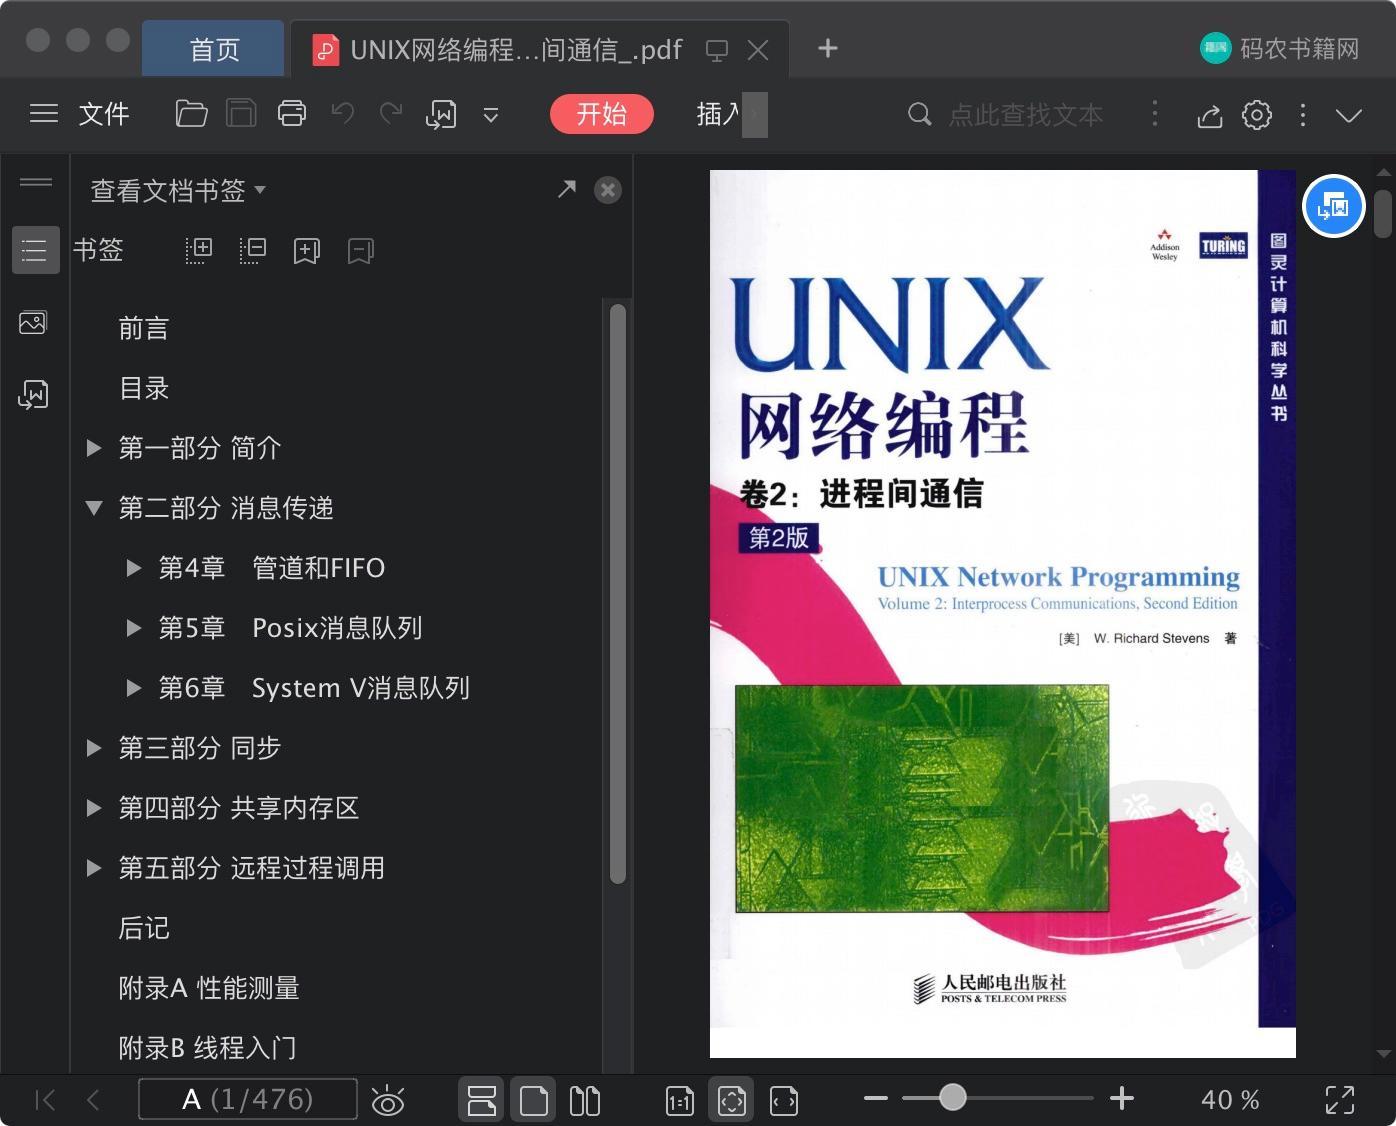 UNIX网络编程 第2版. 第2卷 进程间通信pdf电子书籍下载百度云